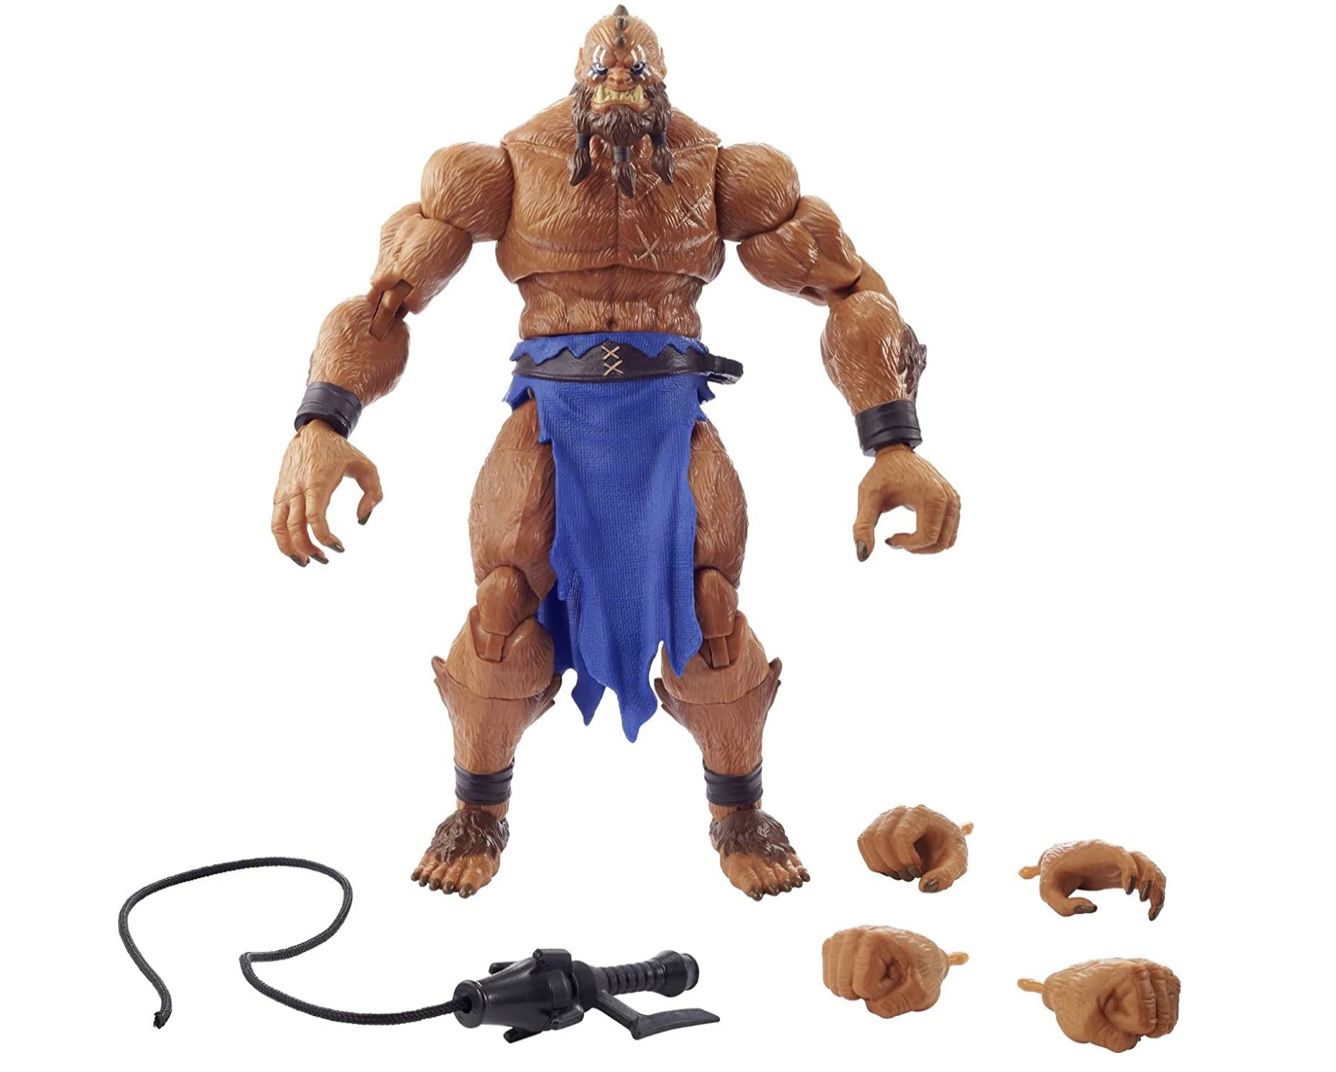 Masters of the Universe GYV16   Beast Man Actionfigur für 12,73€ (statt 18€)   Prime